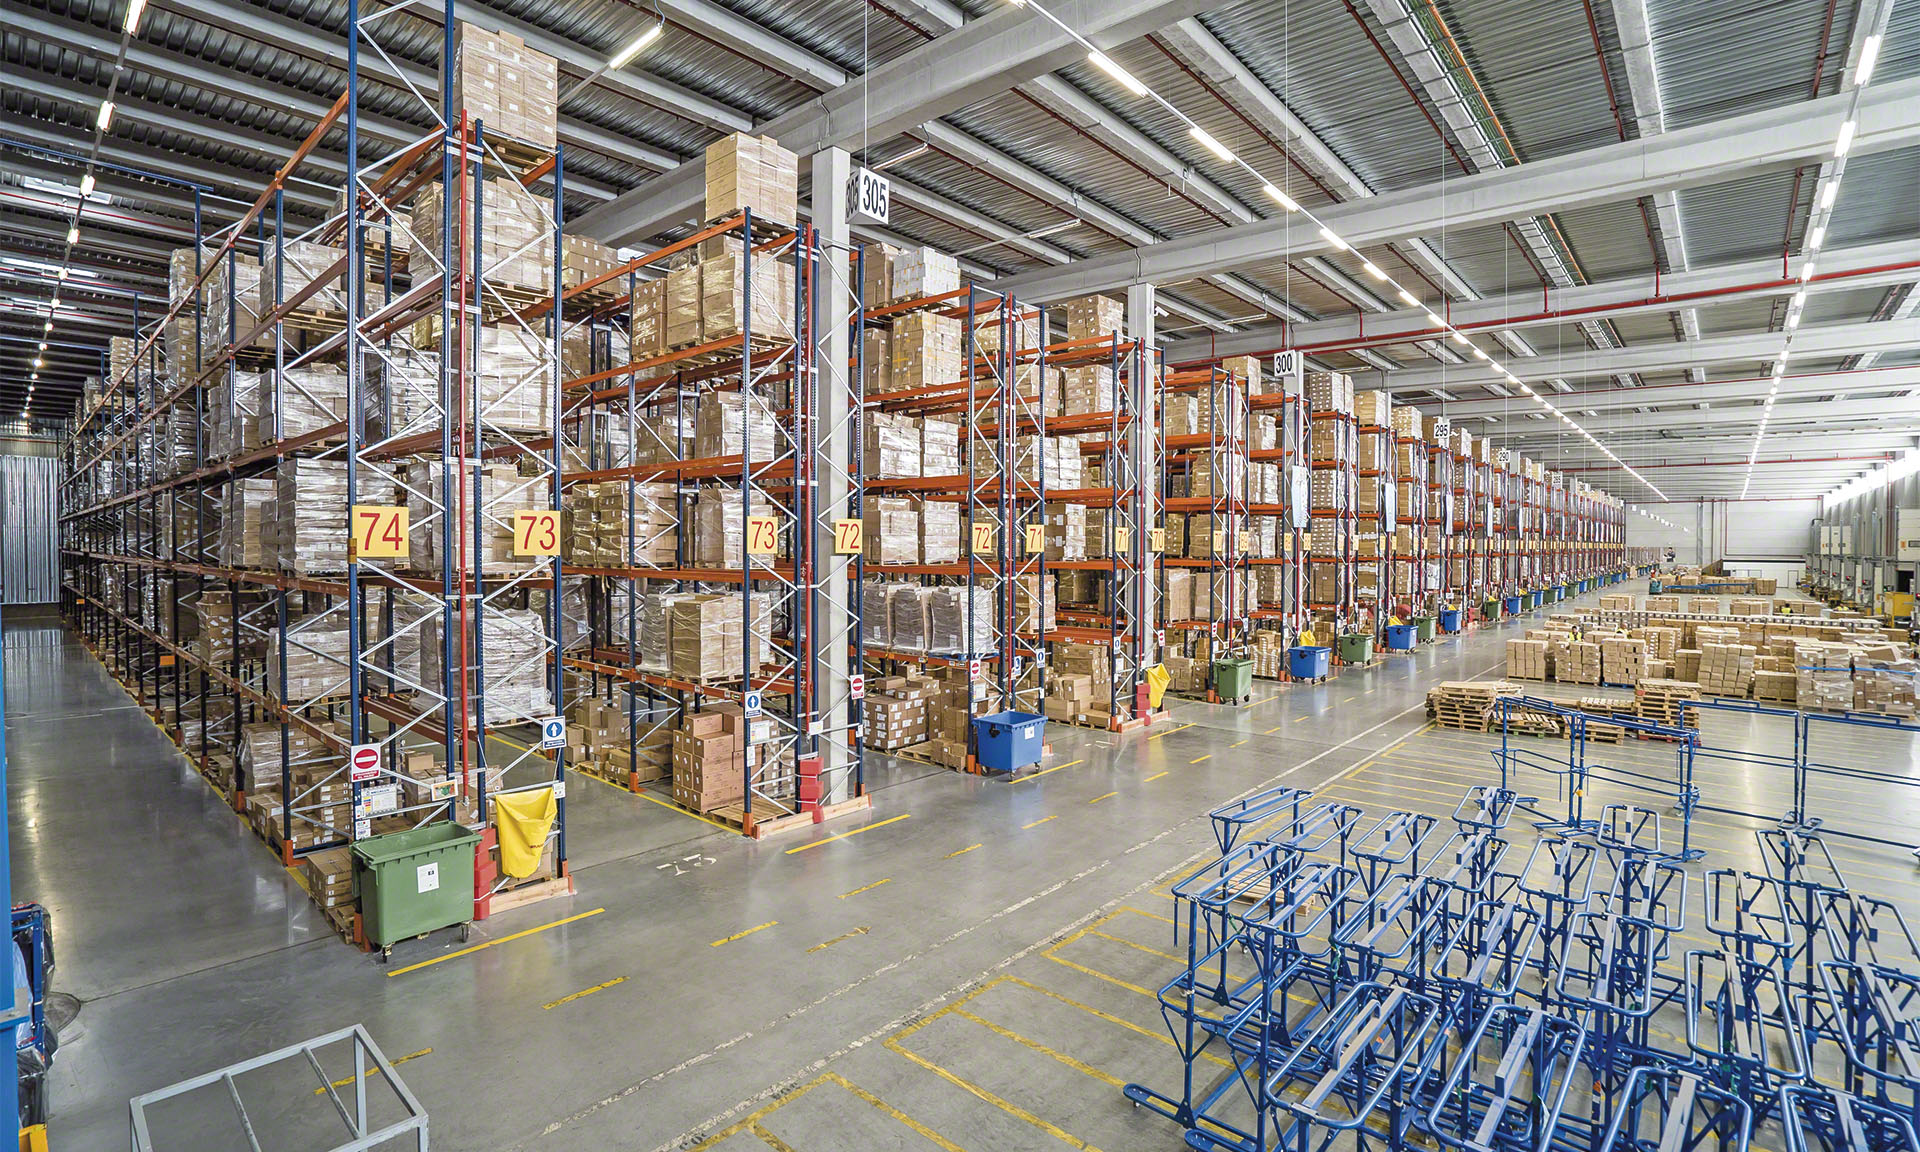 El almacén de DHL dotado con estanterías de paletización convencional está capacitado para almacenar más de 90.000 palets